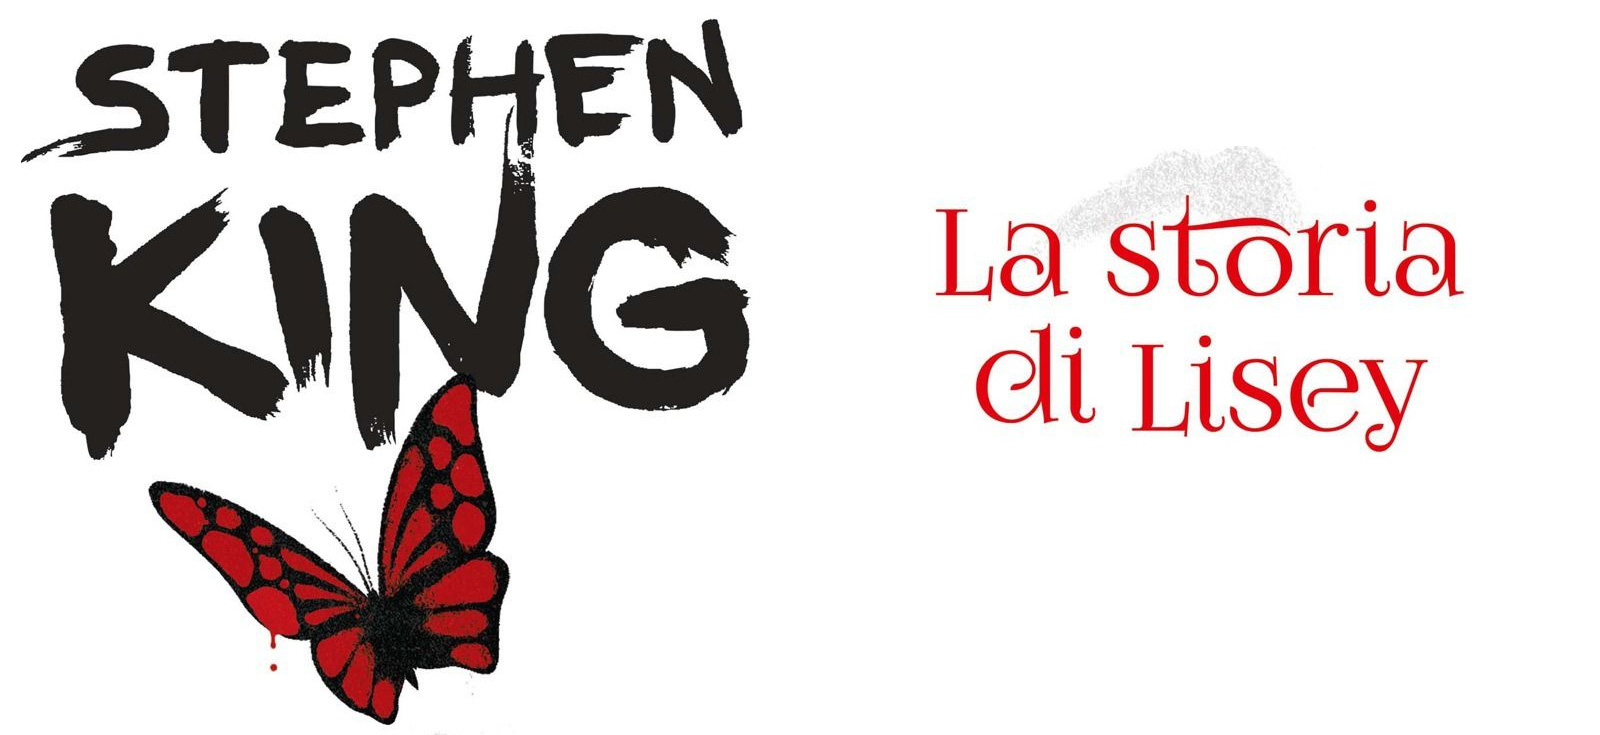 La storia di Lisey di Stephen King